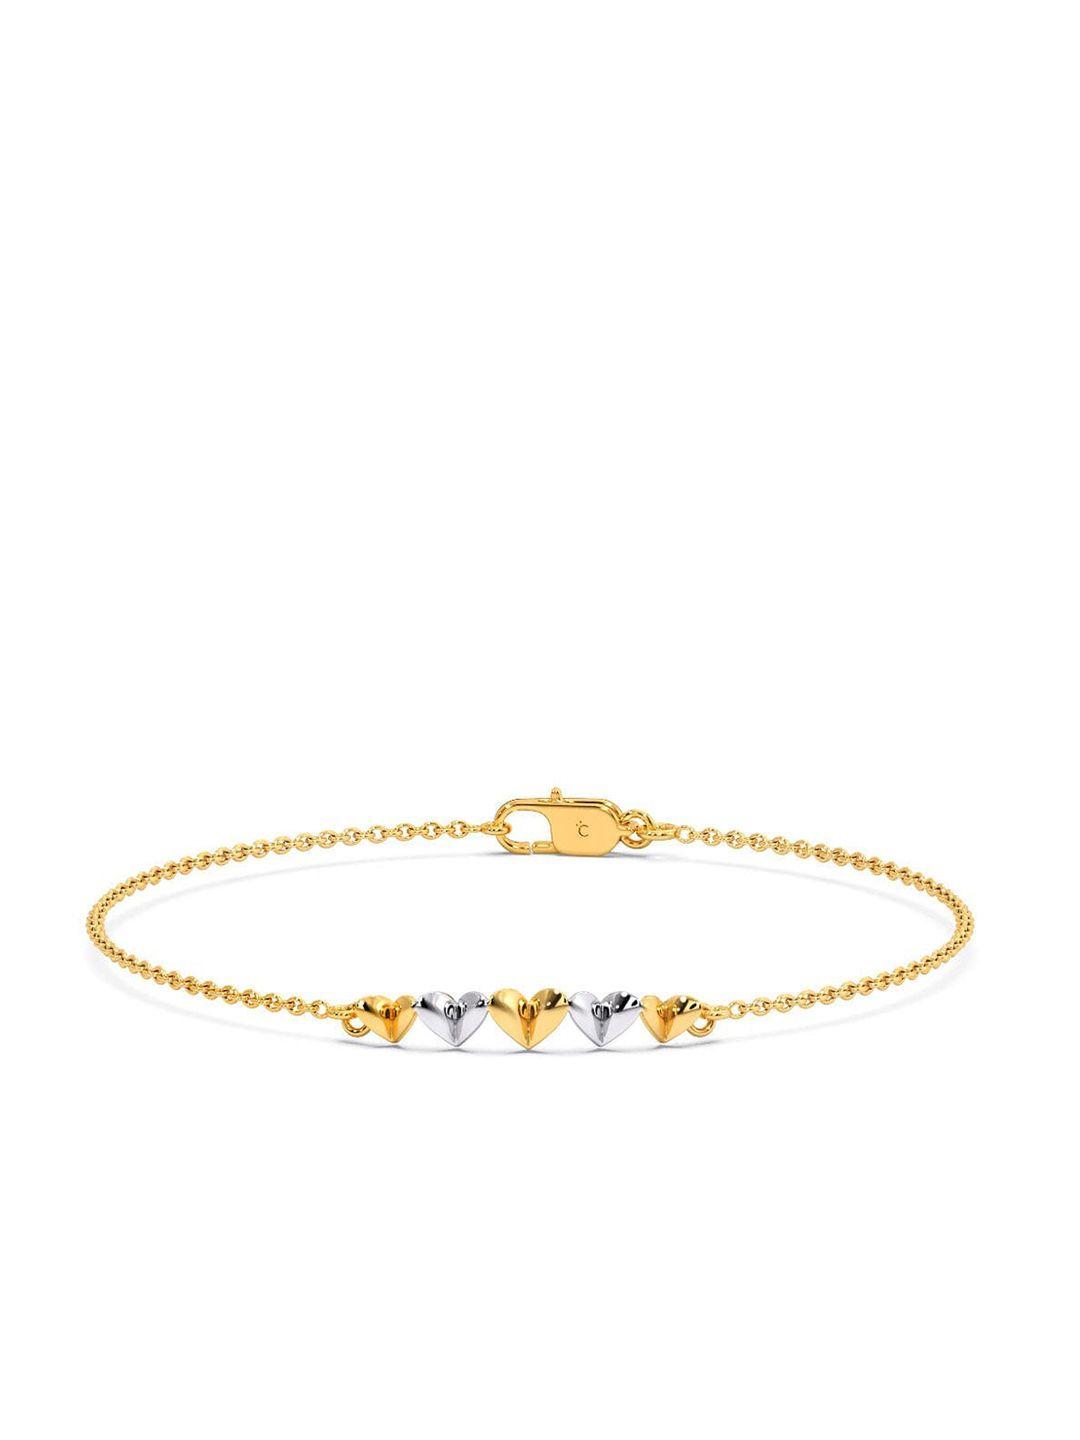 candere a kalyan jewellers company 14kt bis hallmark gold bracelet-1.89 g